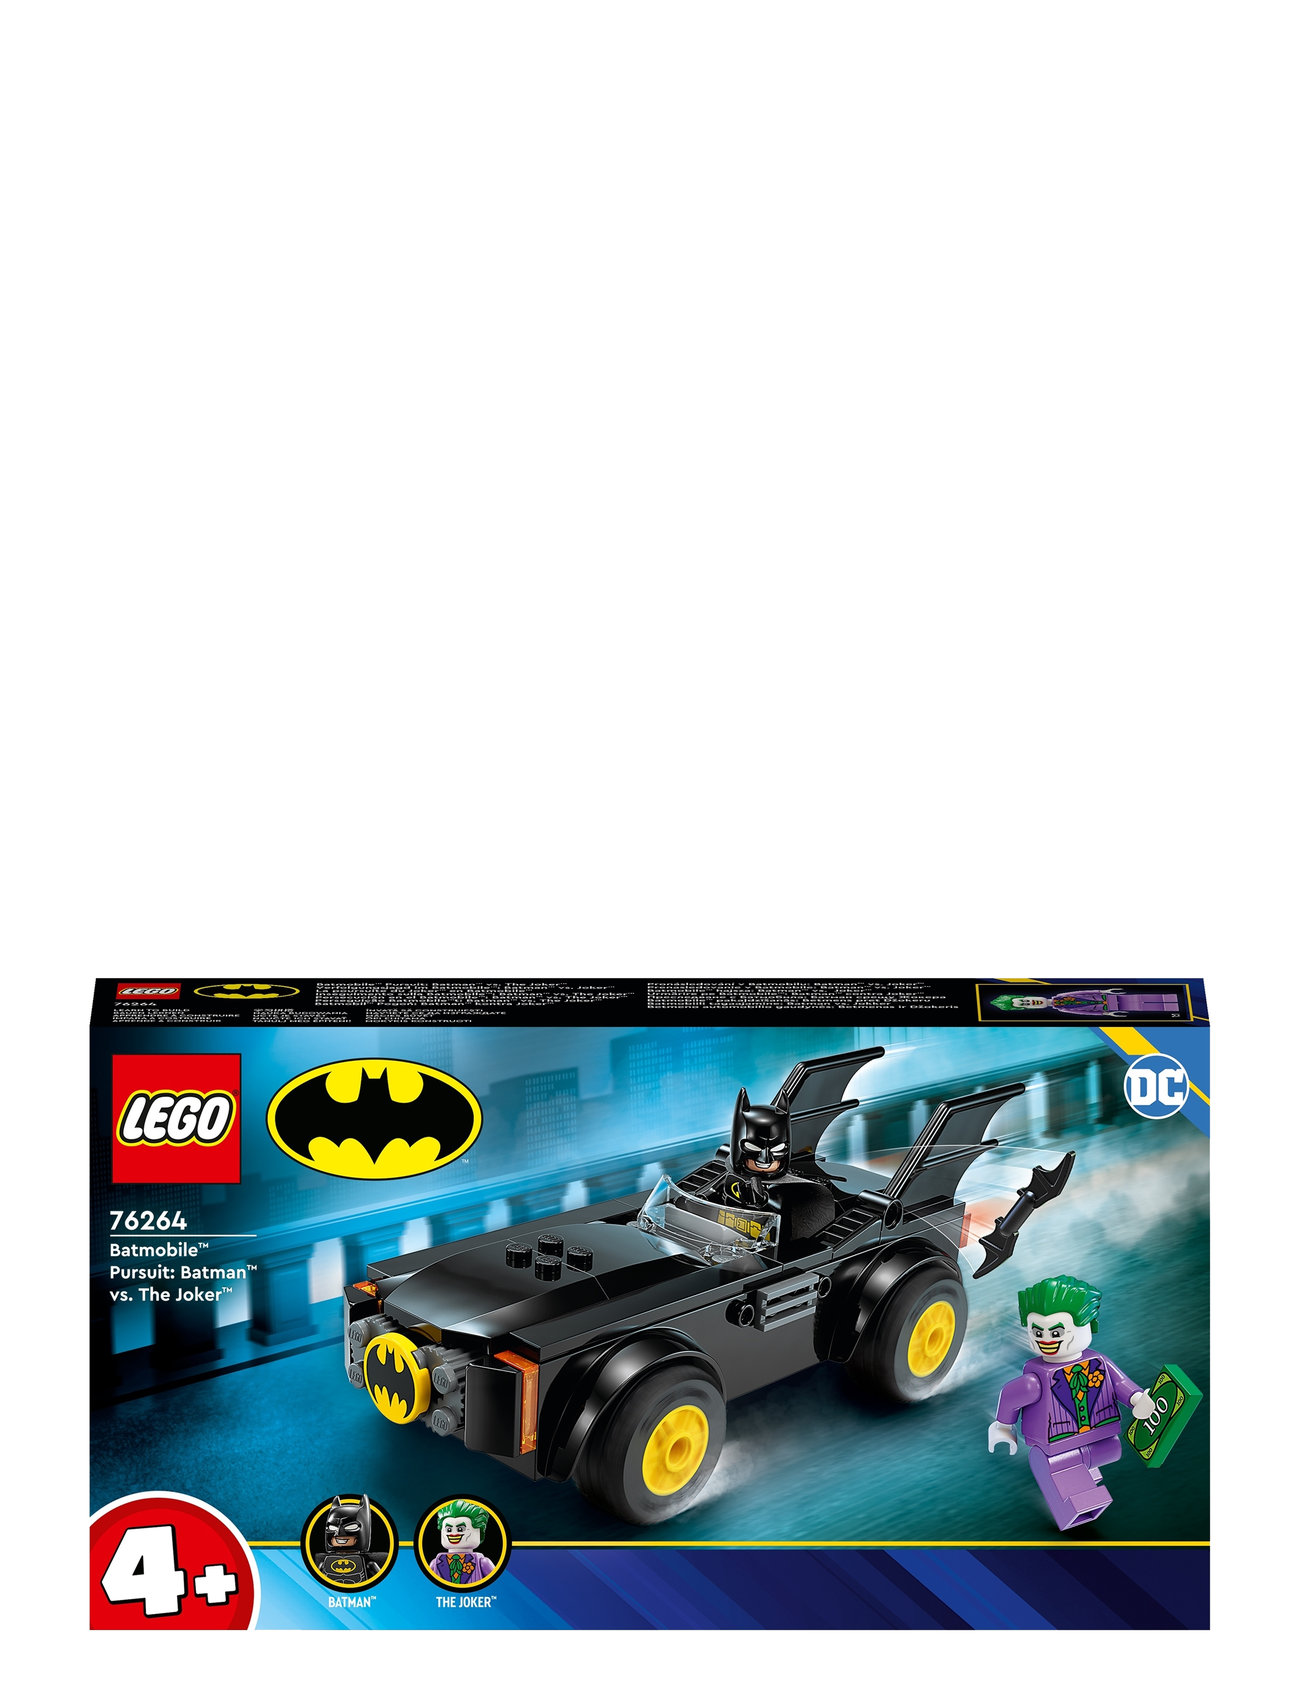 Dc Batmobile Pursuit: Batman Vs. The Joker 4+ Set Toys Lego Toys Lego Super Heroes Multi/patterned LEGO